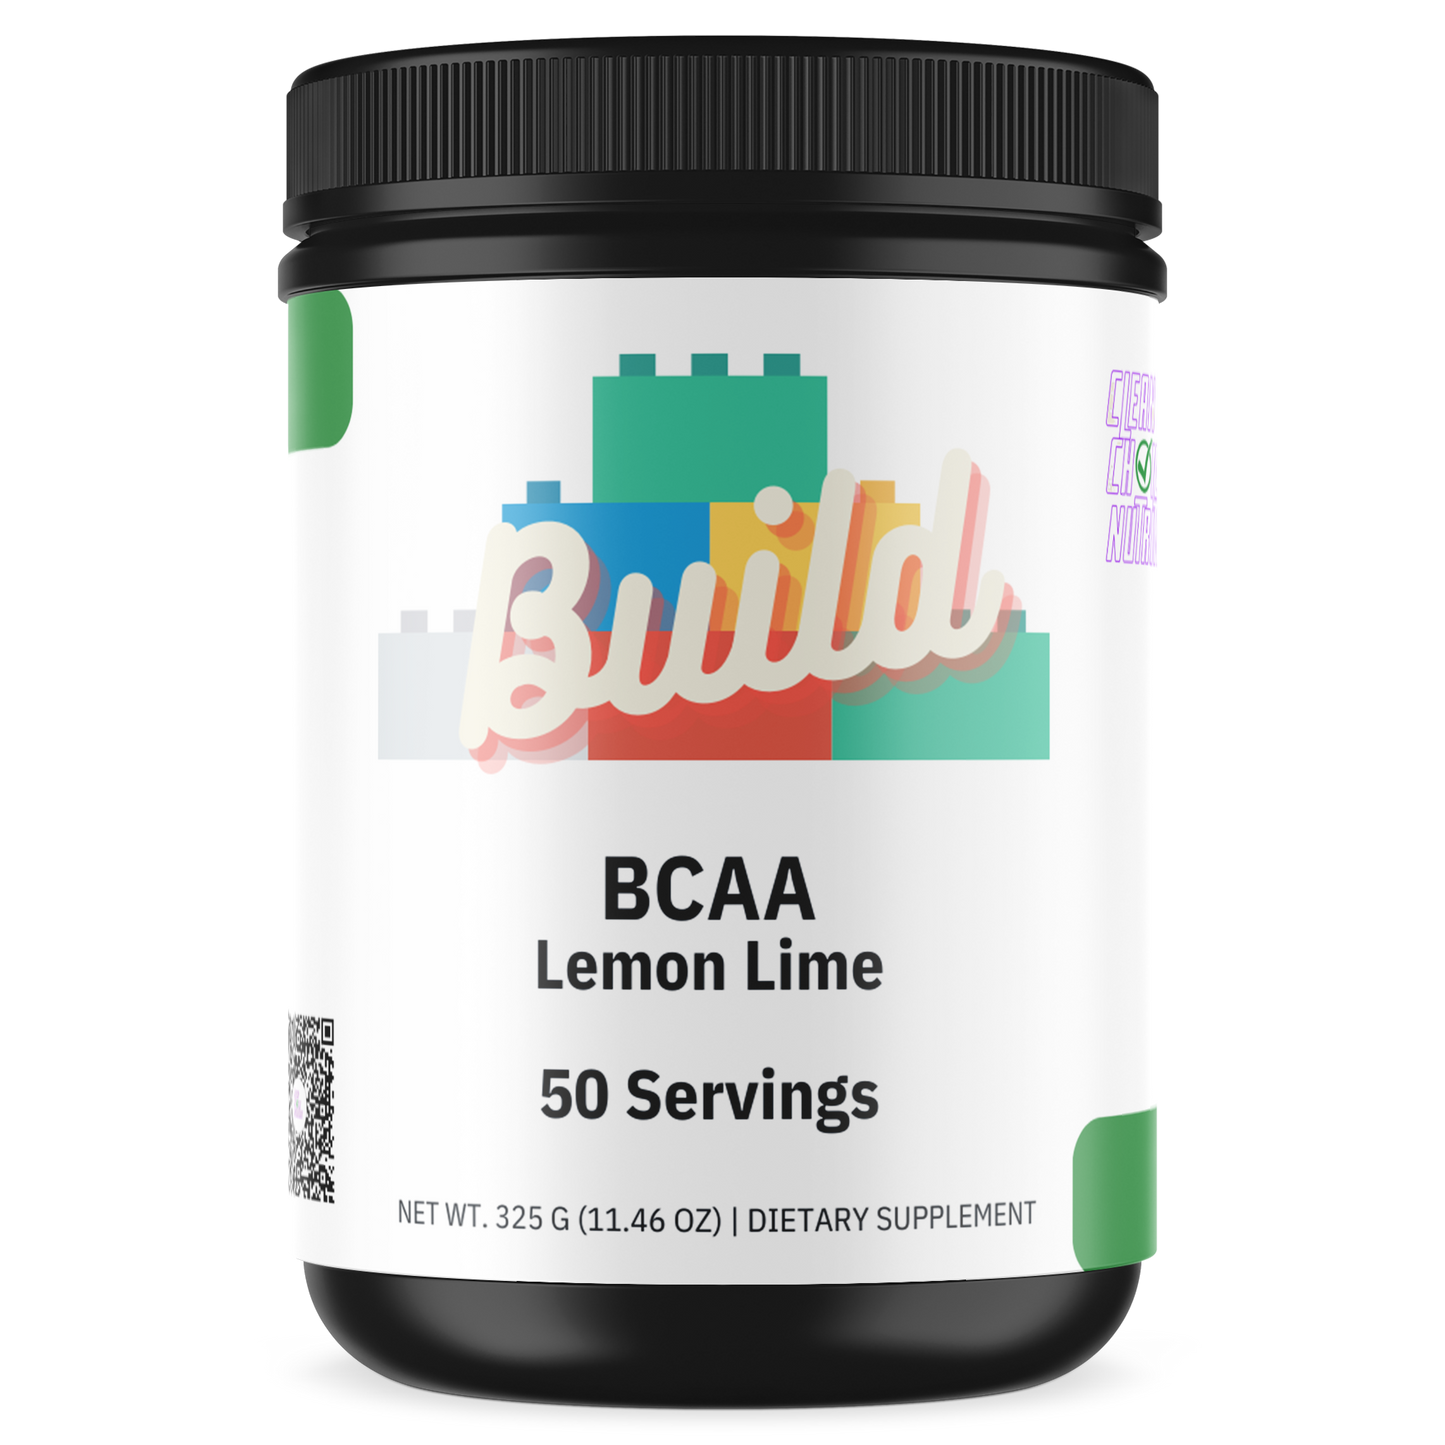 Build - BCAA (Lemon Lime)